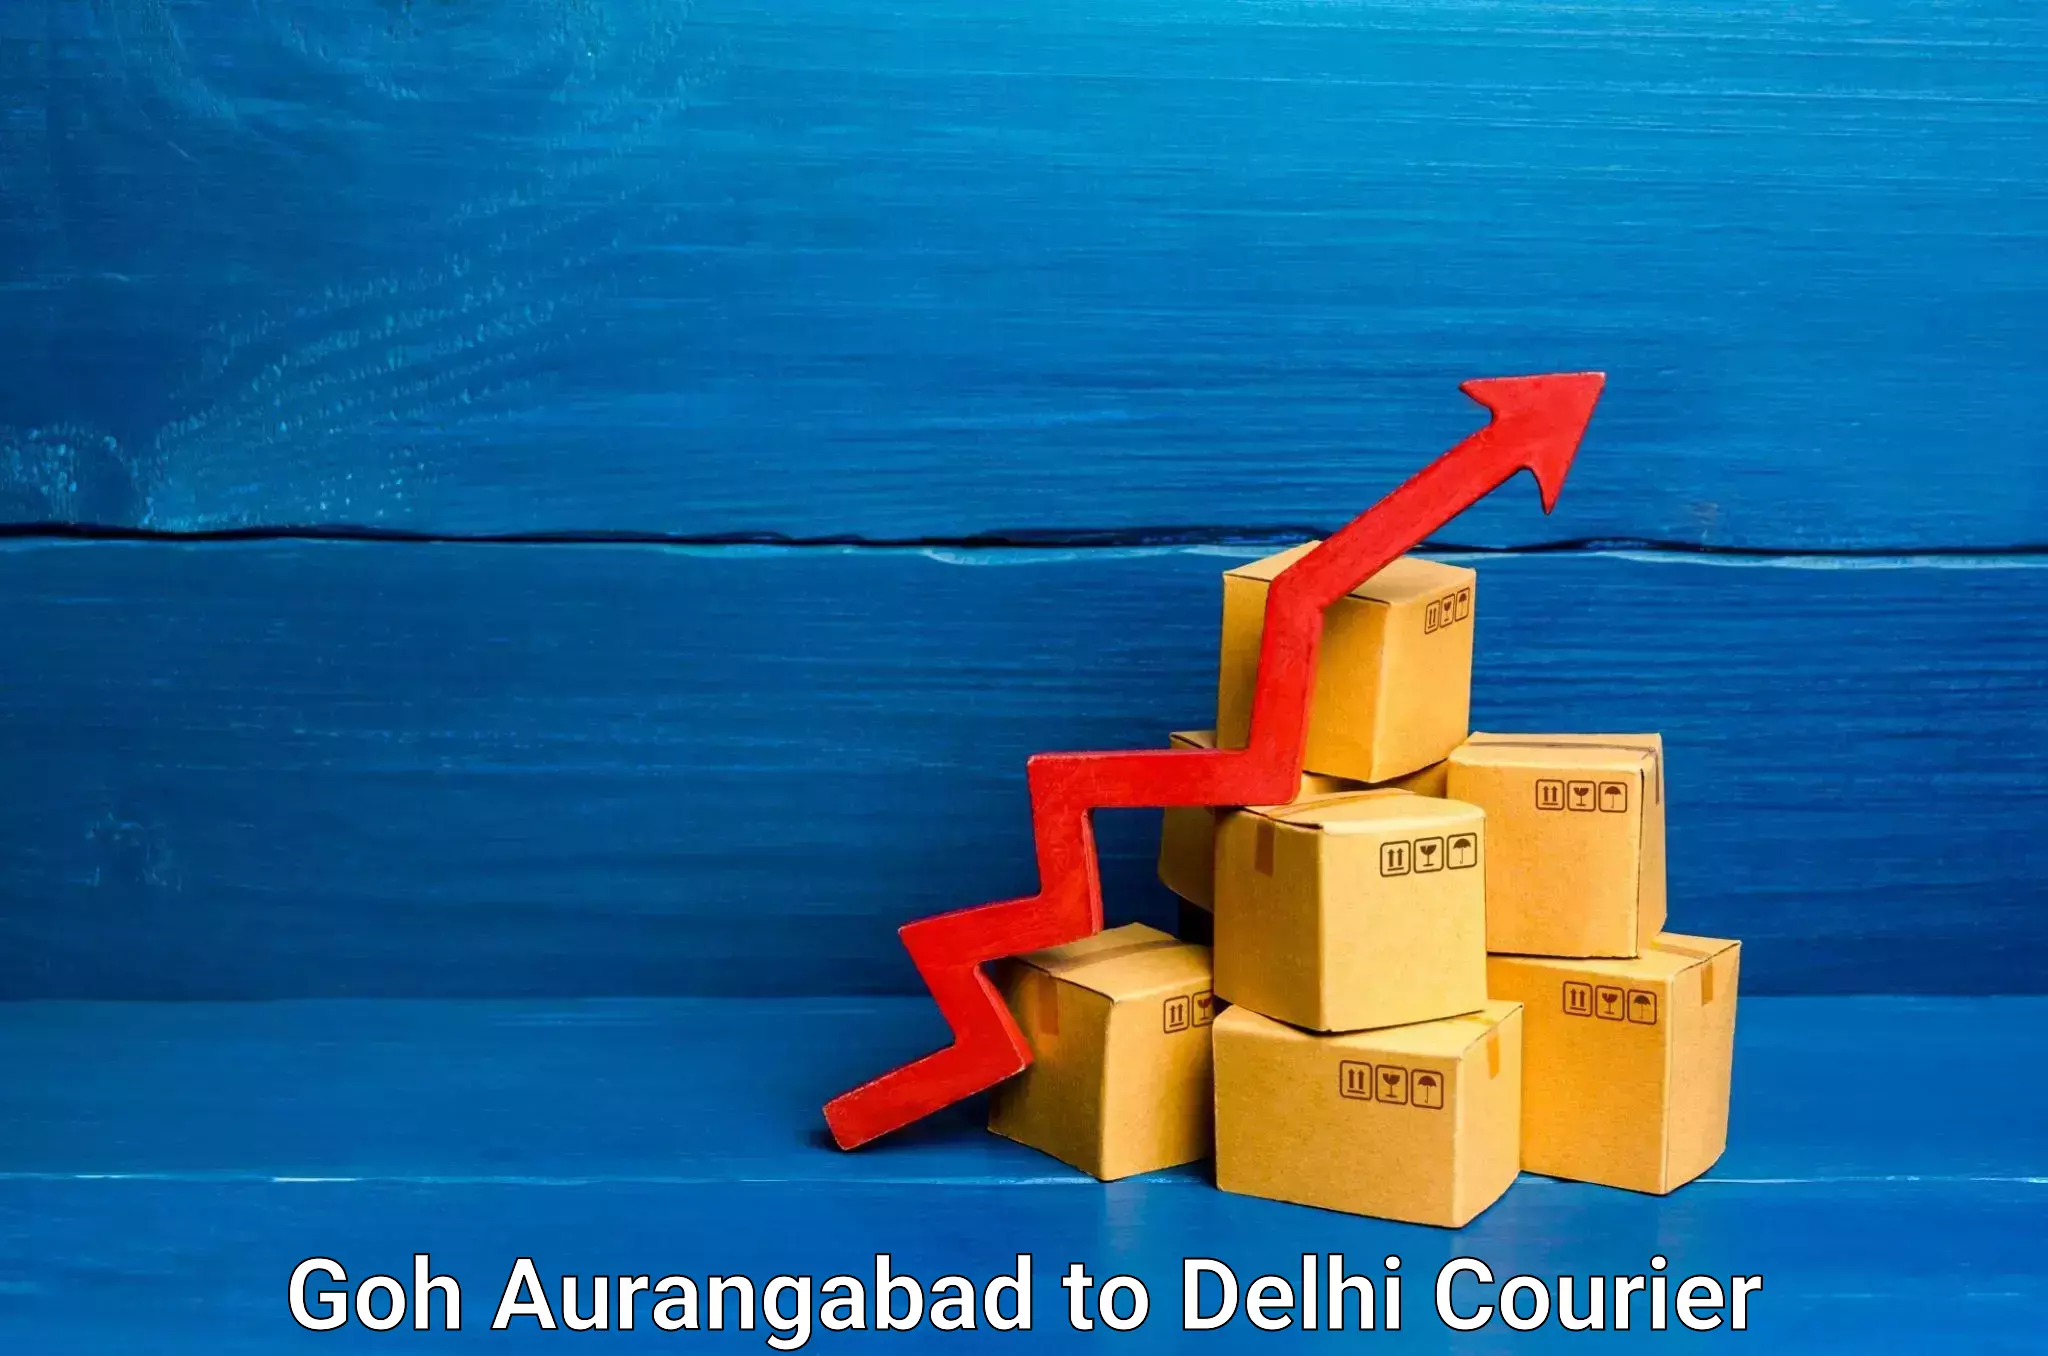 Furniture delivery service Goh Aurangabad to Subhash Nagar